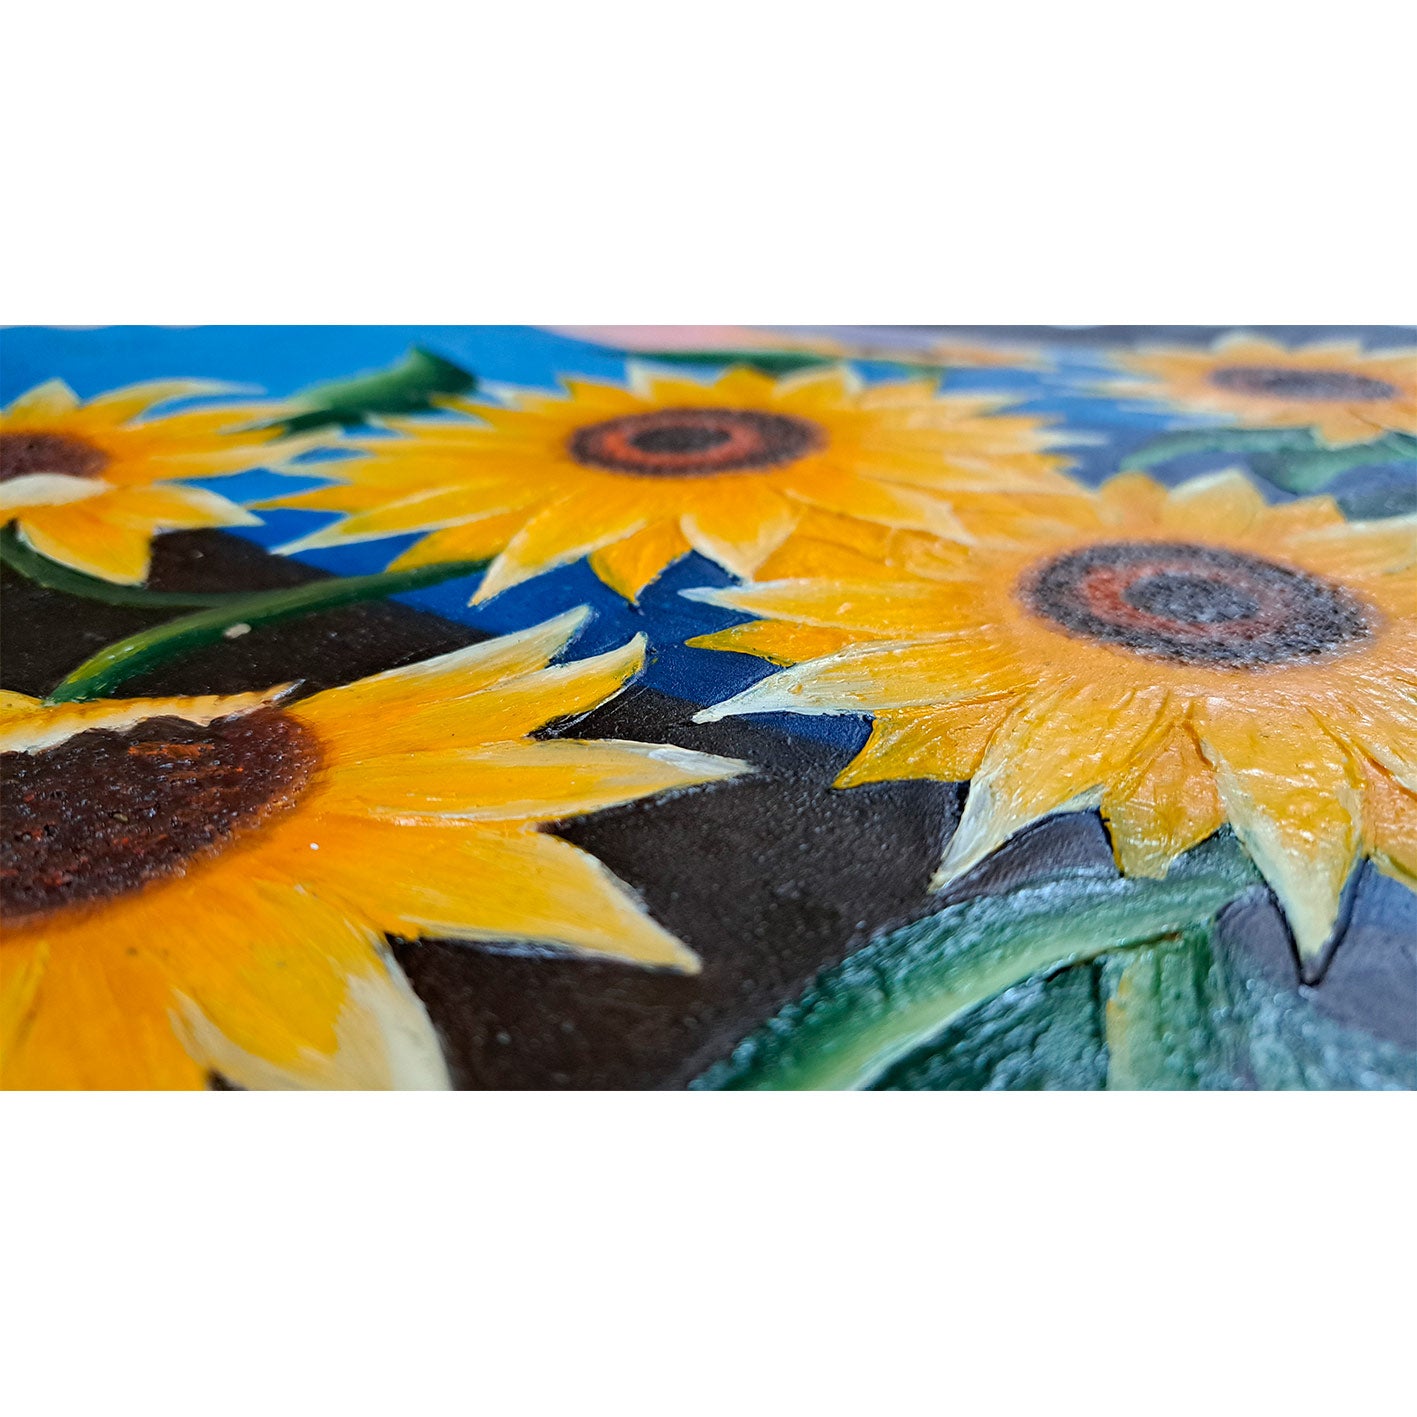 Sonnenblumenvasengemälde 50x60 cm